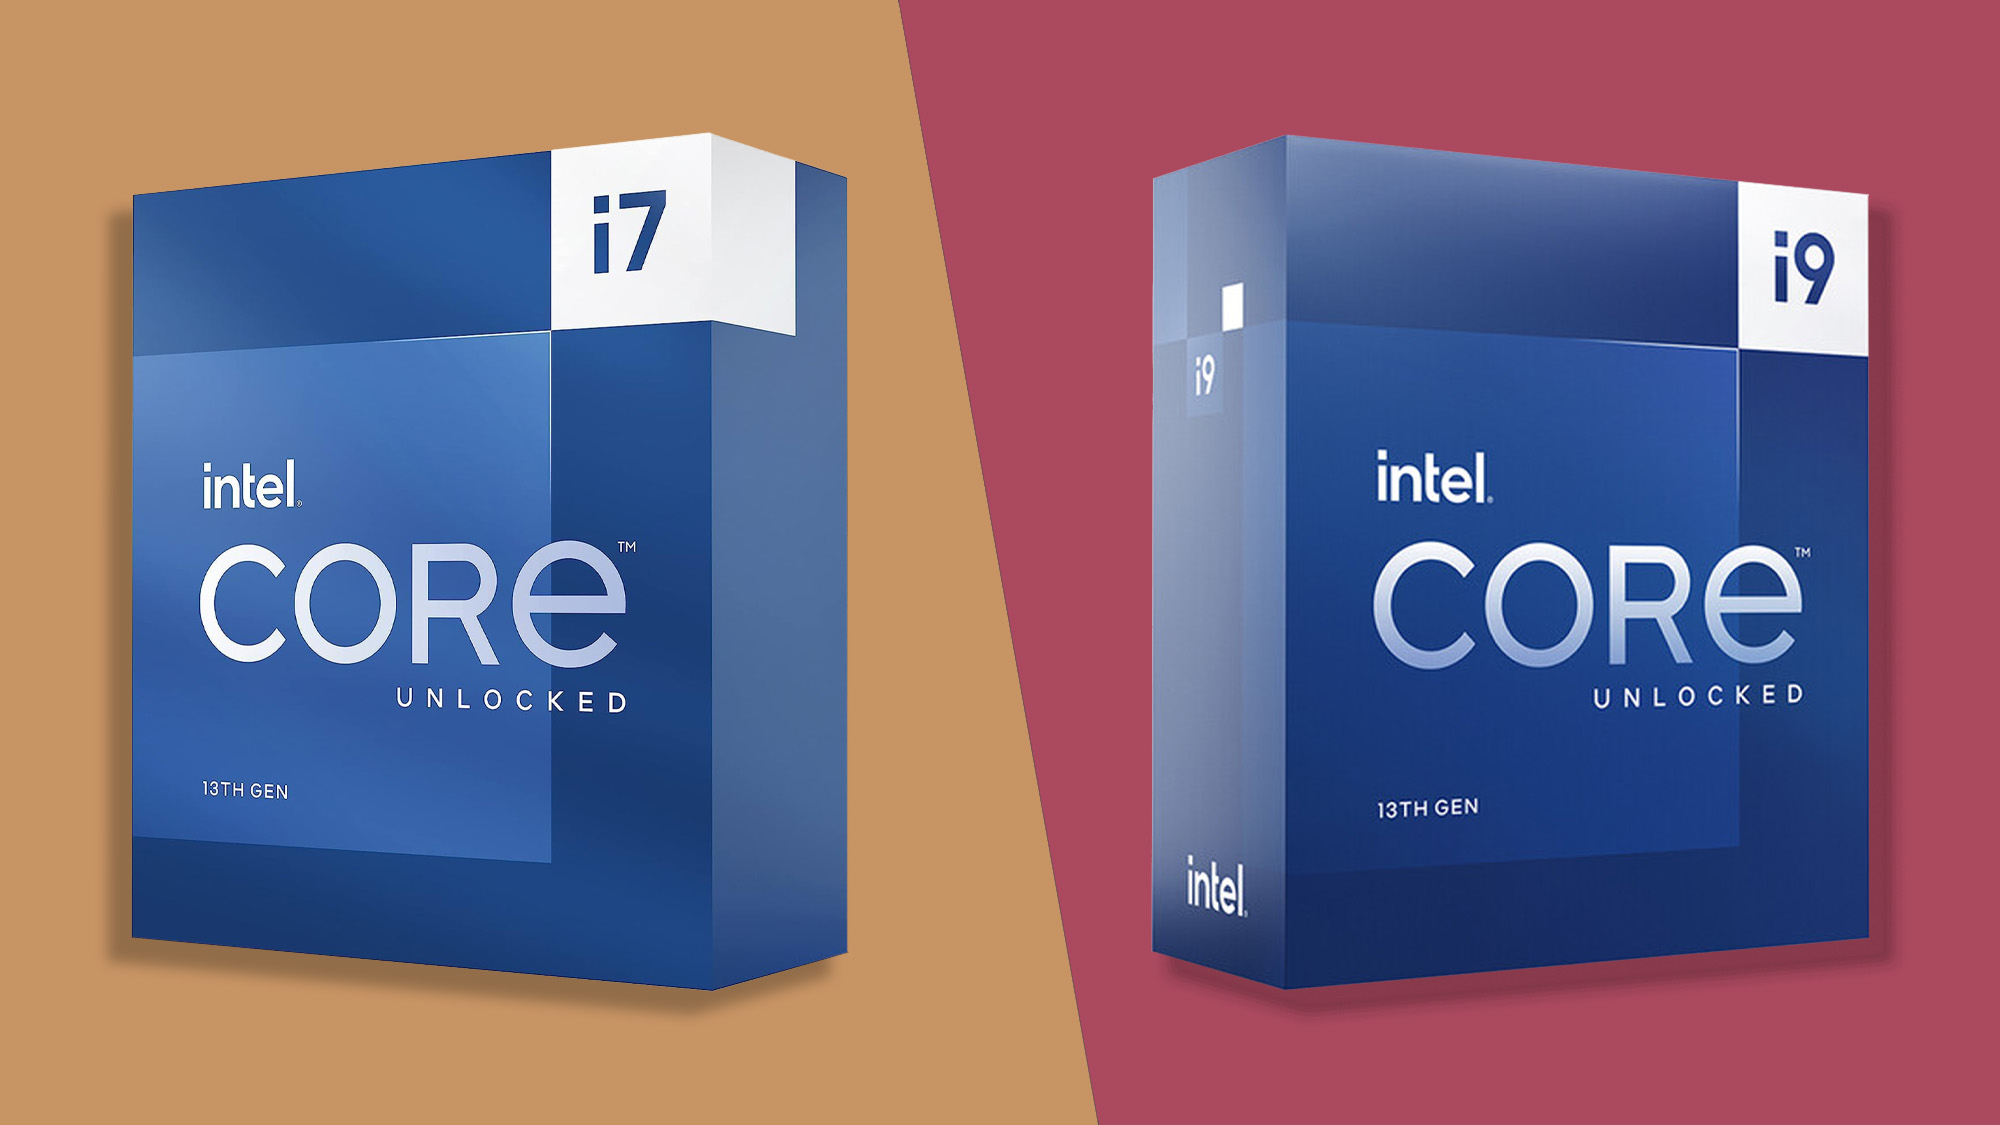 Intel Core i7-14700K Review: i9-13900K For The Masses? - Guiding Tech